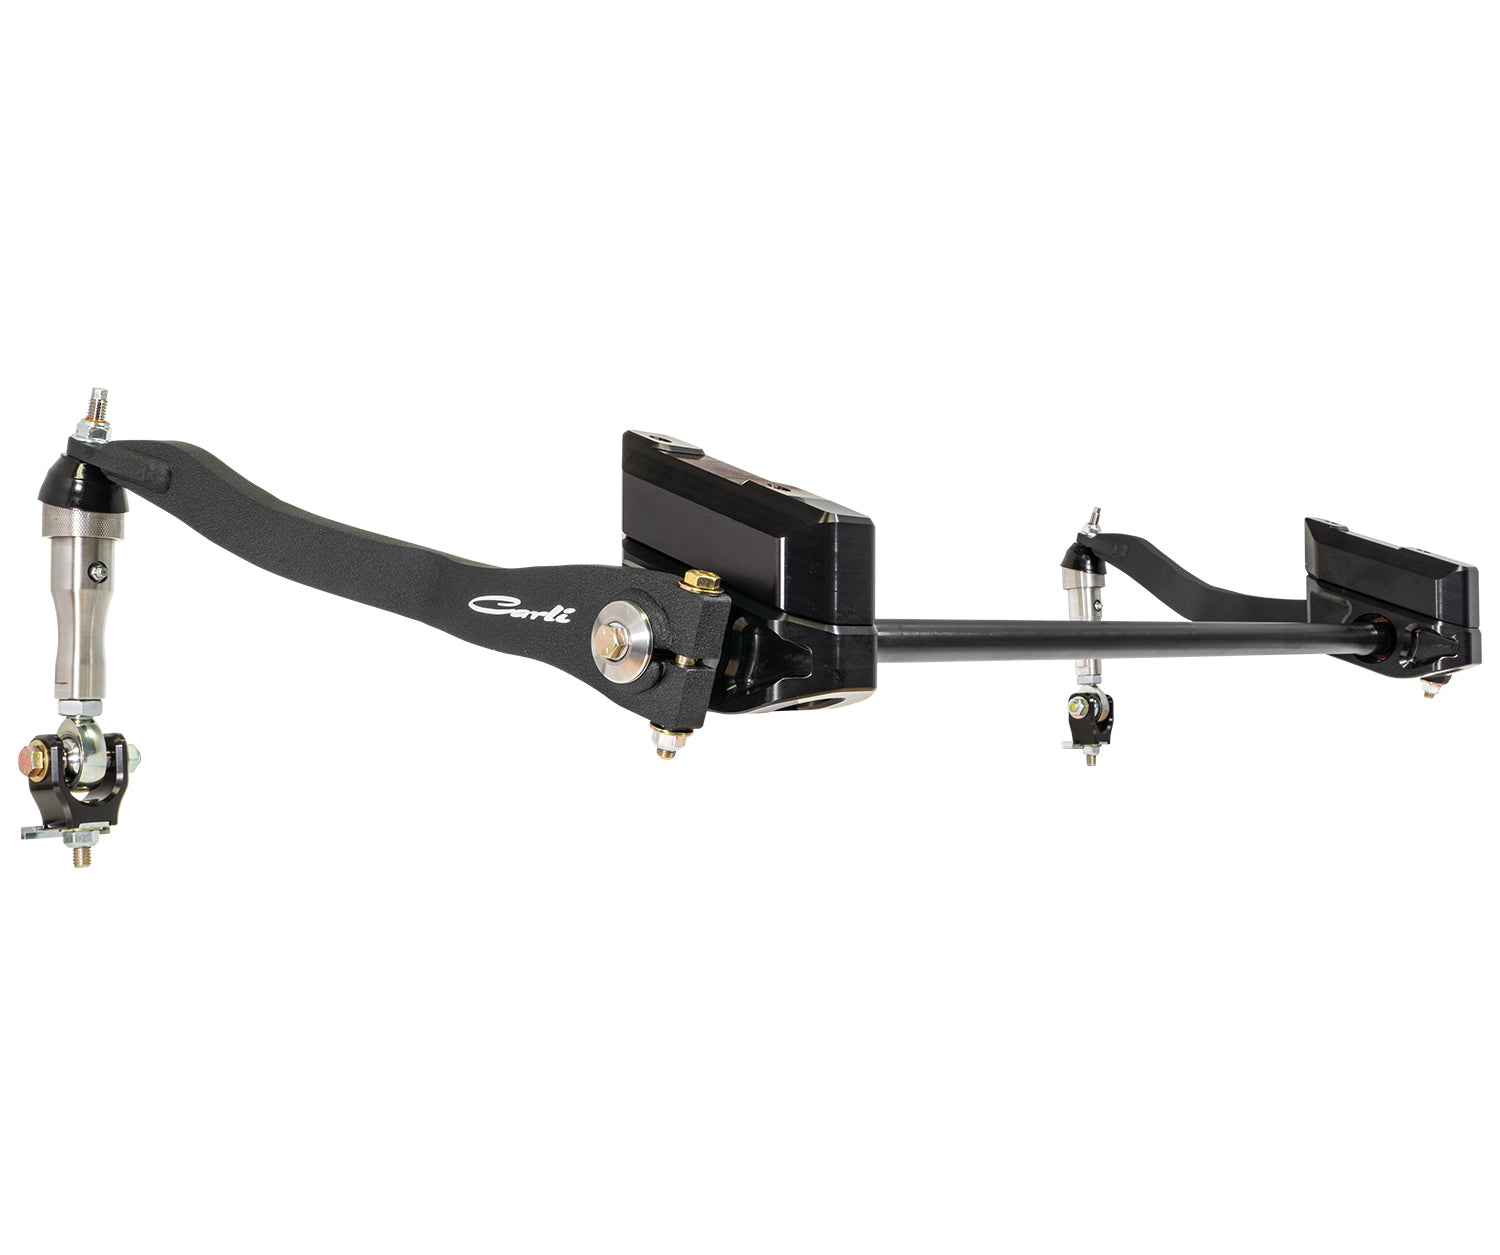 Carli Suspension CS-FTSB-LVL-11 Torsion Sway Bar Kit - 2.5 inch Lift